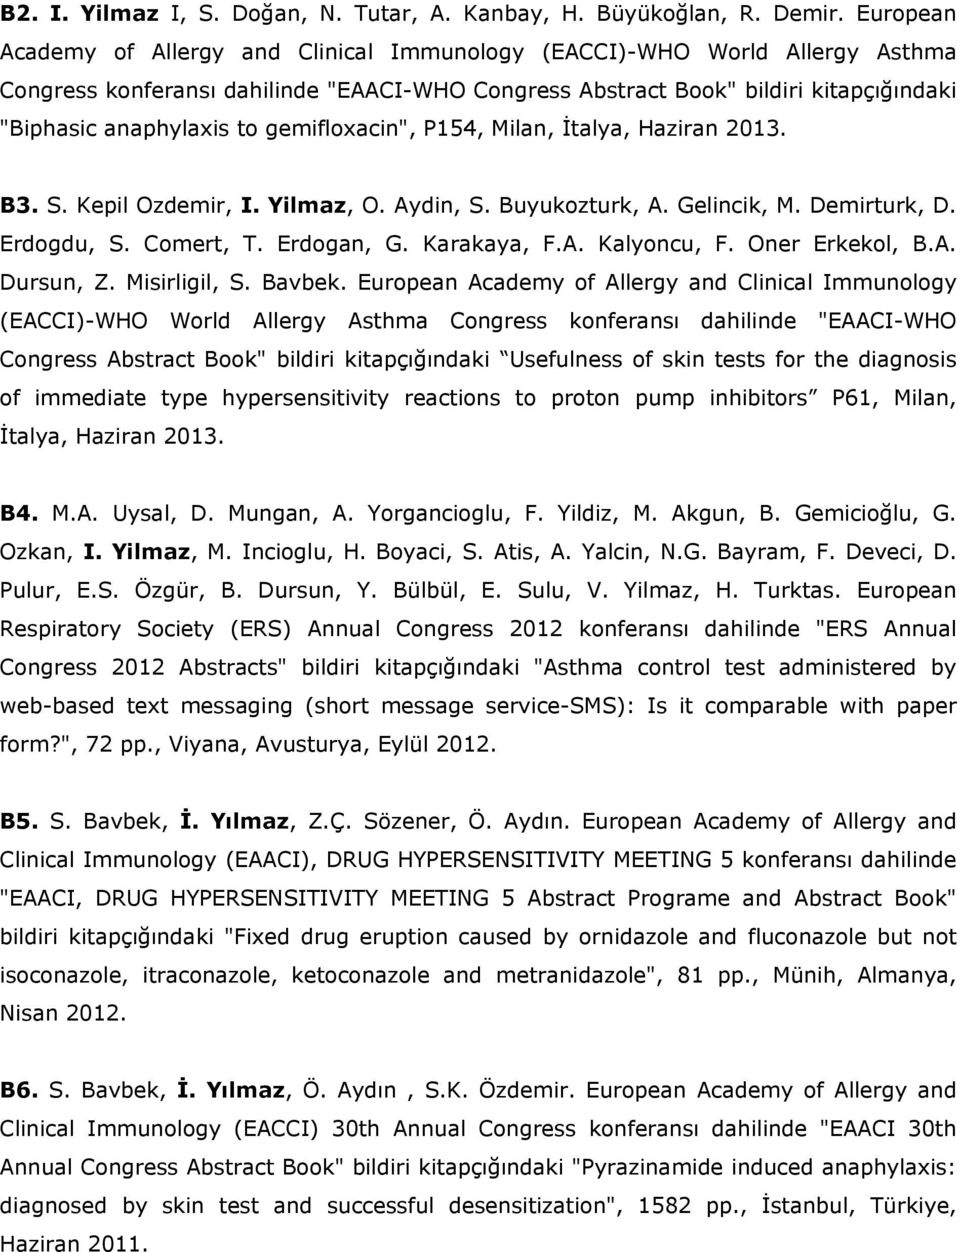 gemifloxacin", P154, Milan, İtalya, Haziran 2013. B3. S. Kepil Ozdemir, I. Yilmaz, O. Aydin, S. Buyukozturk, A. Gelincik, M. Demirturk, D. Erdogdu, S. Comert, T. Erdogan, G. Karakaya, F.A. Kalyoncu, F.